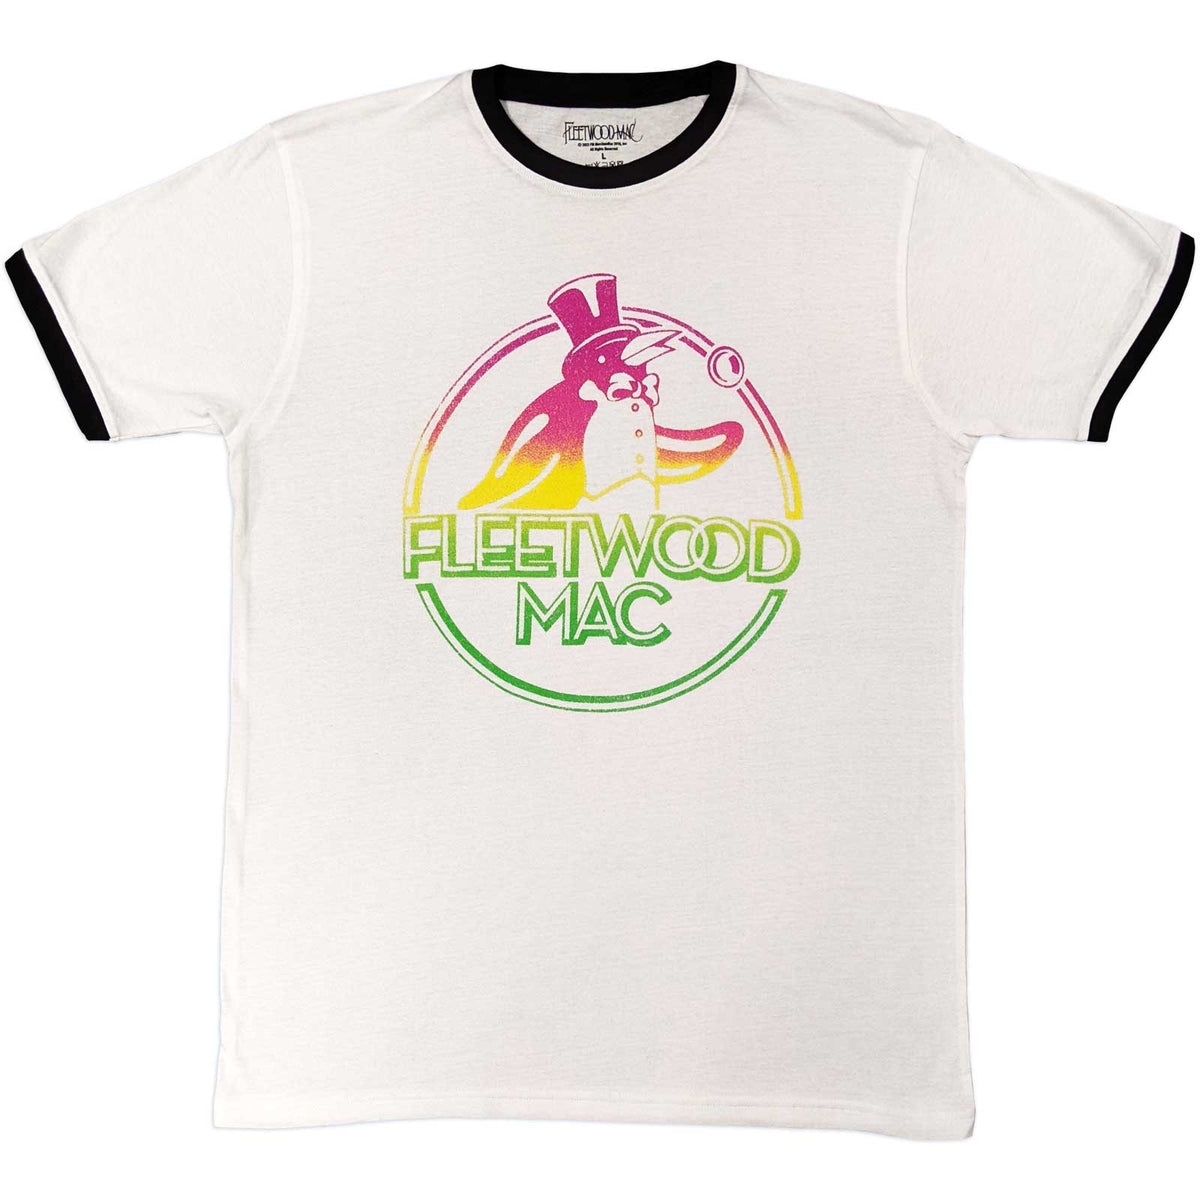 Fleetwood Mac Adult Ringer T-Shirt - Penguins - White Official Licensed Design